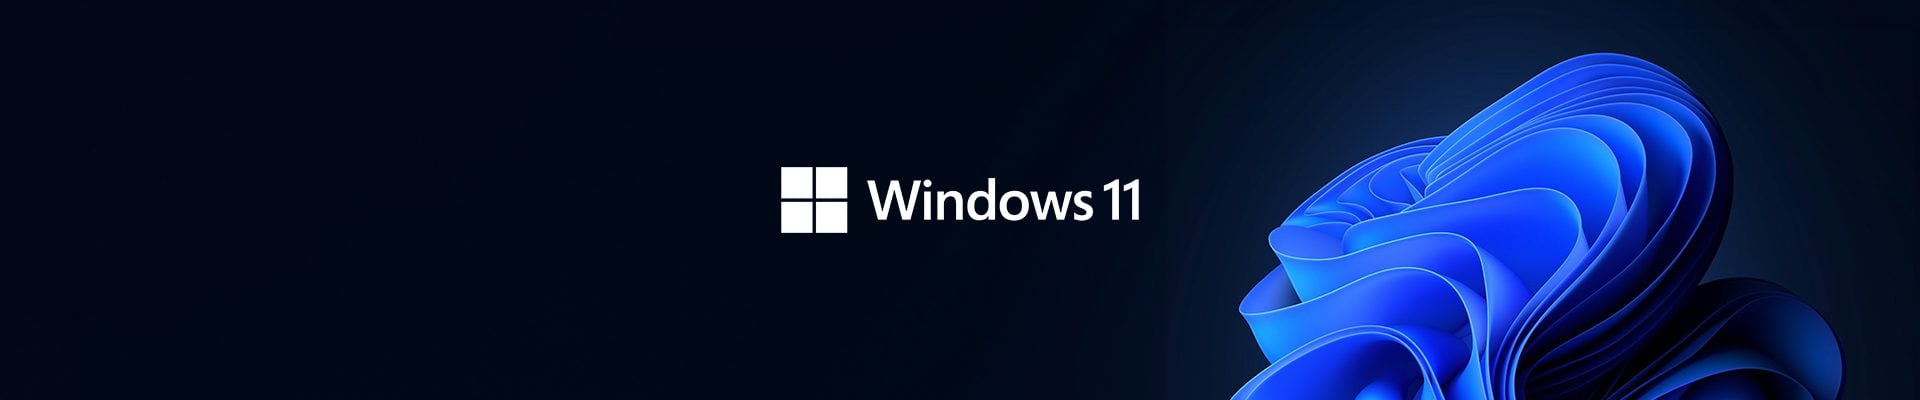 Windows 11 – the next generation of Windows